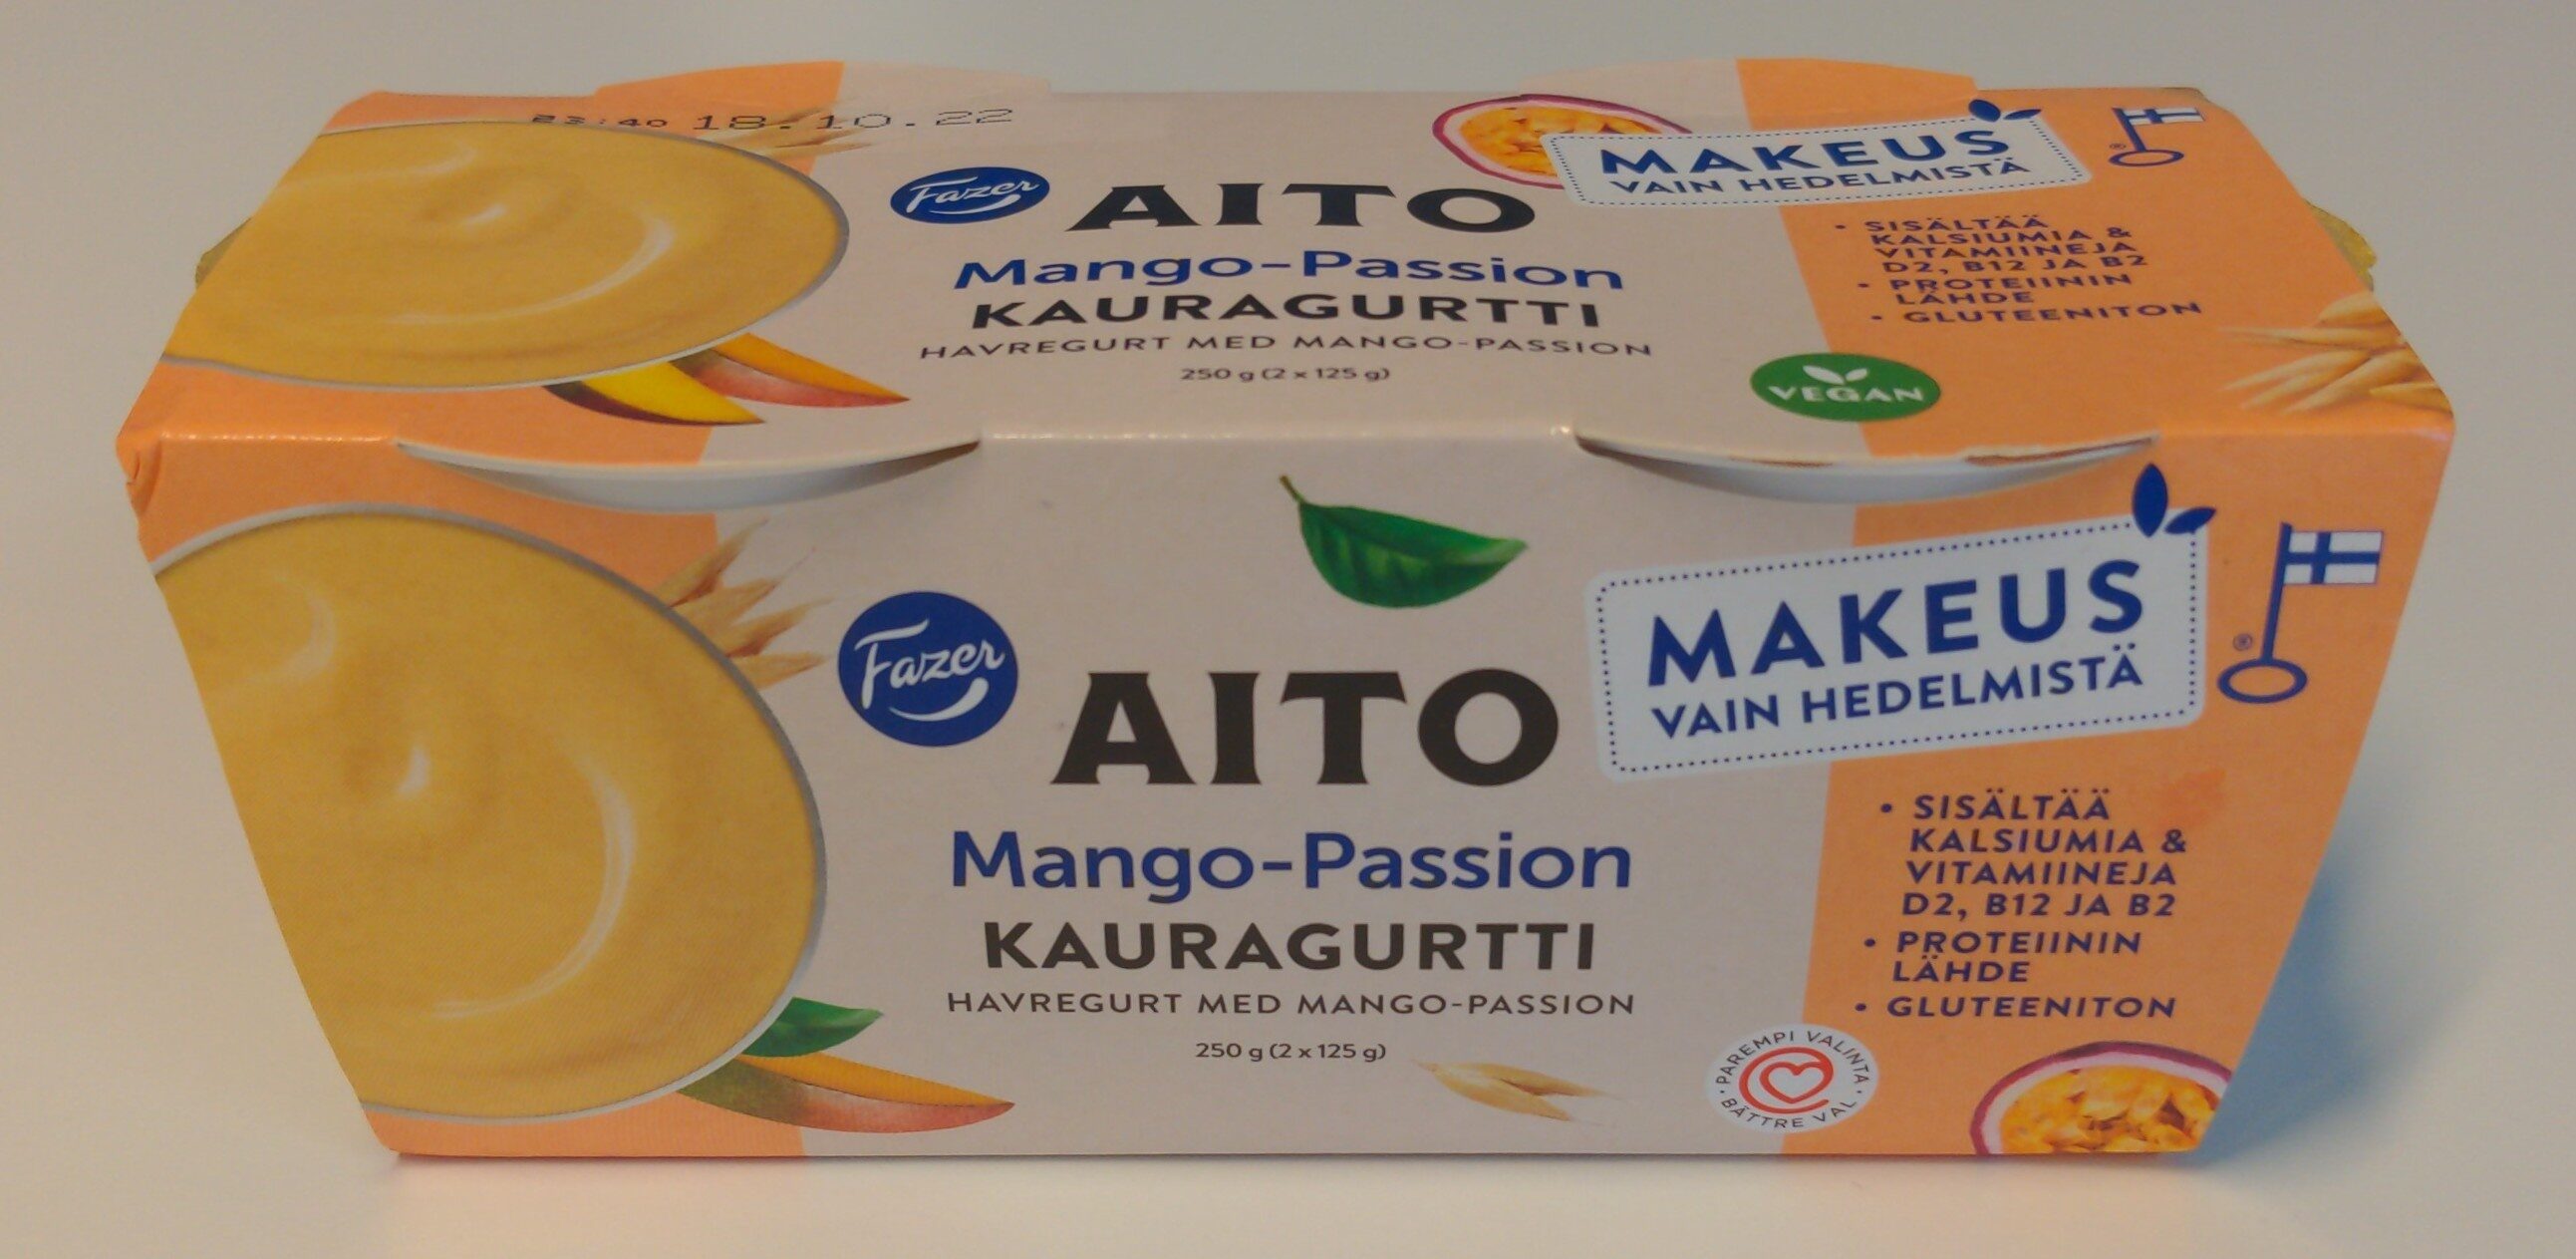 Aito kauragurtti mango-passion - نتاج - fi